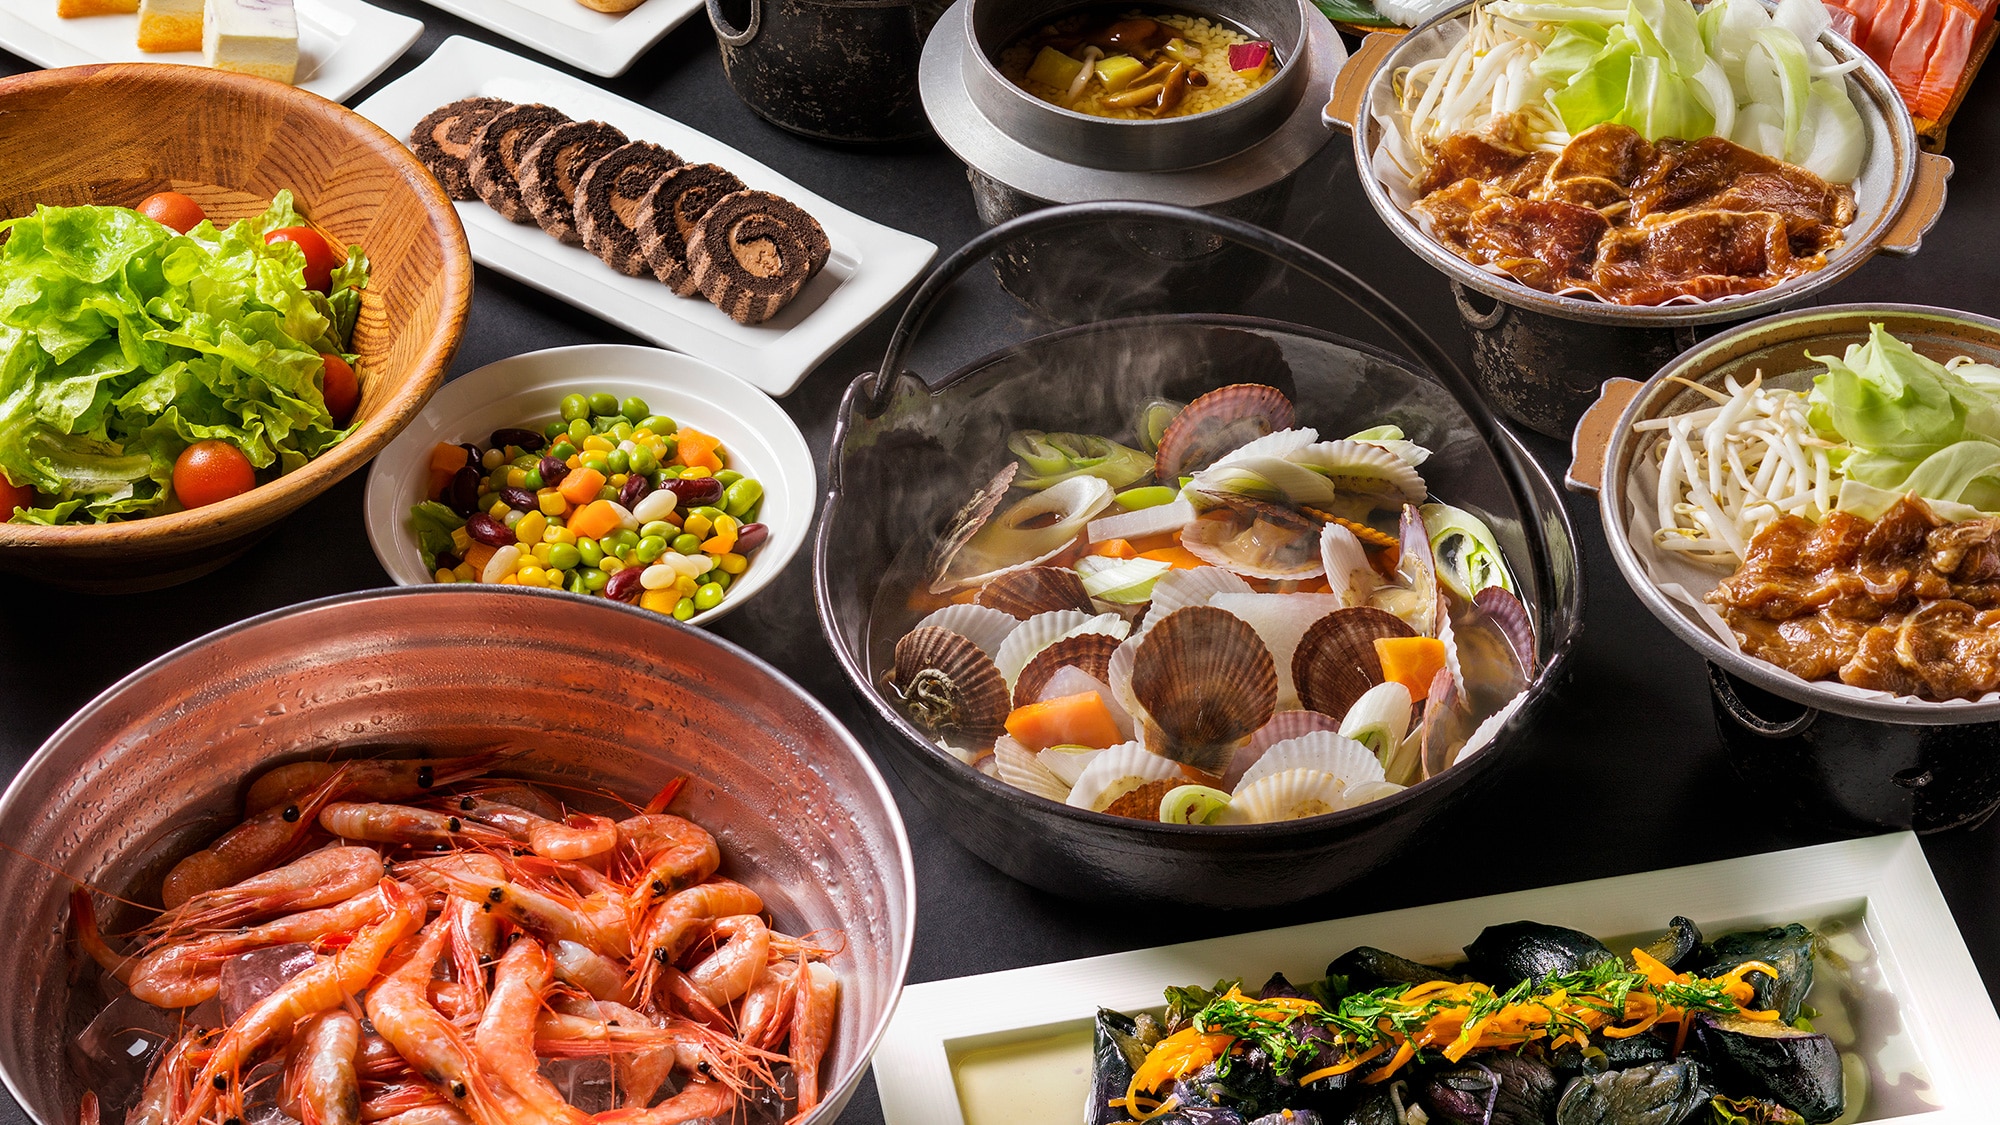 [Contoh buffet makan malam] Nikmati banyak makanan laut pegunungan yang segar dengan prasmanan Jepang, Barat, dan Cina.